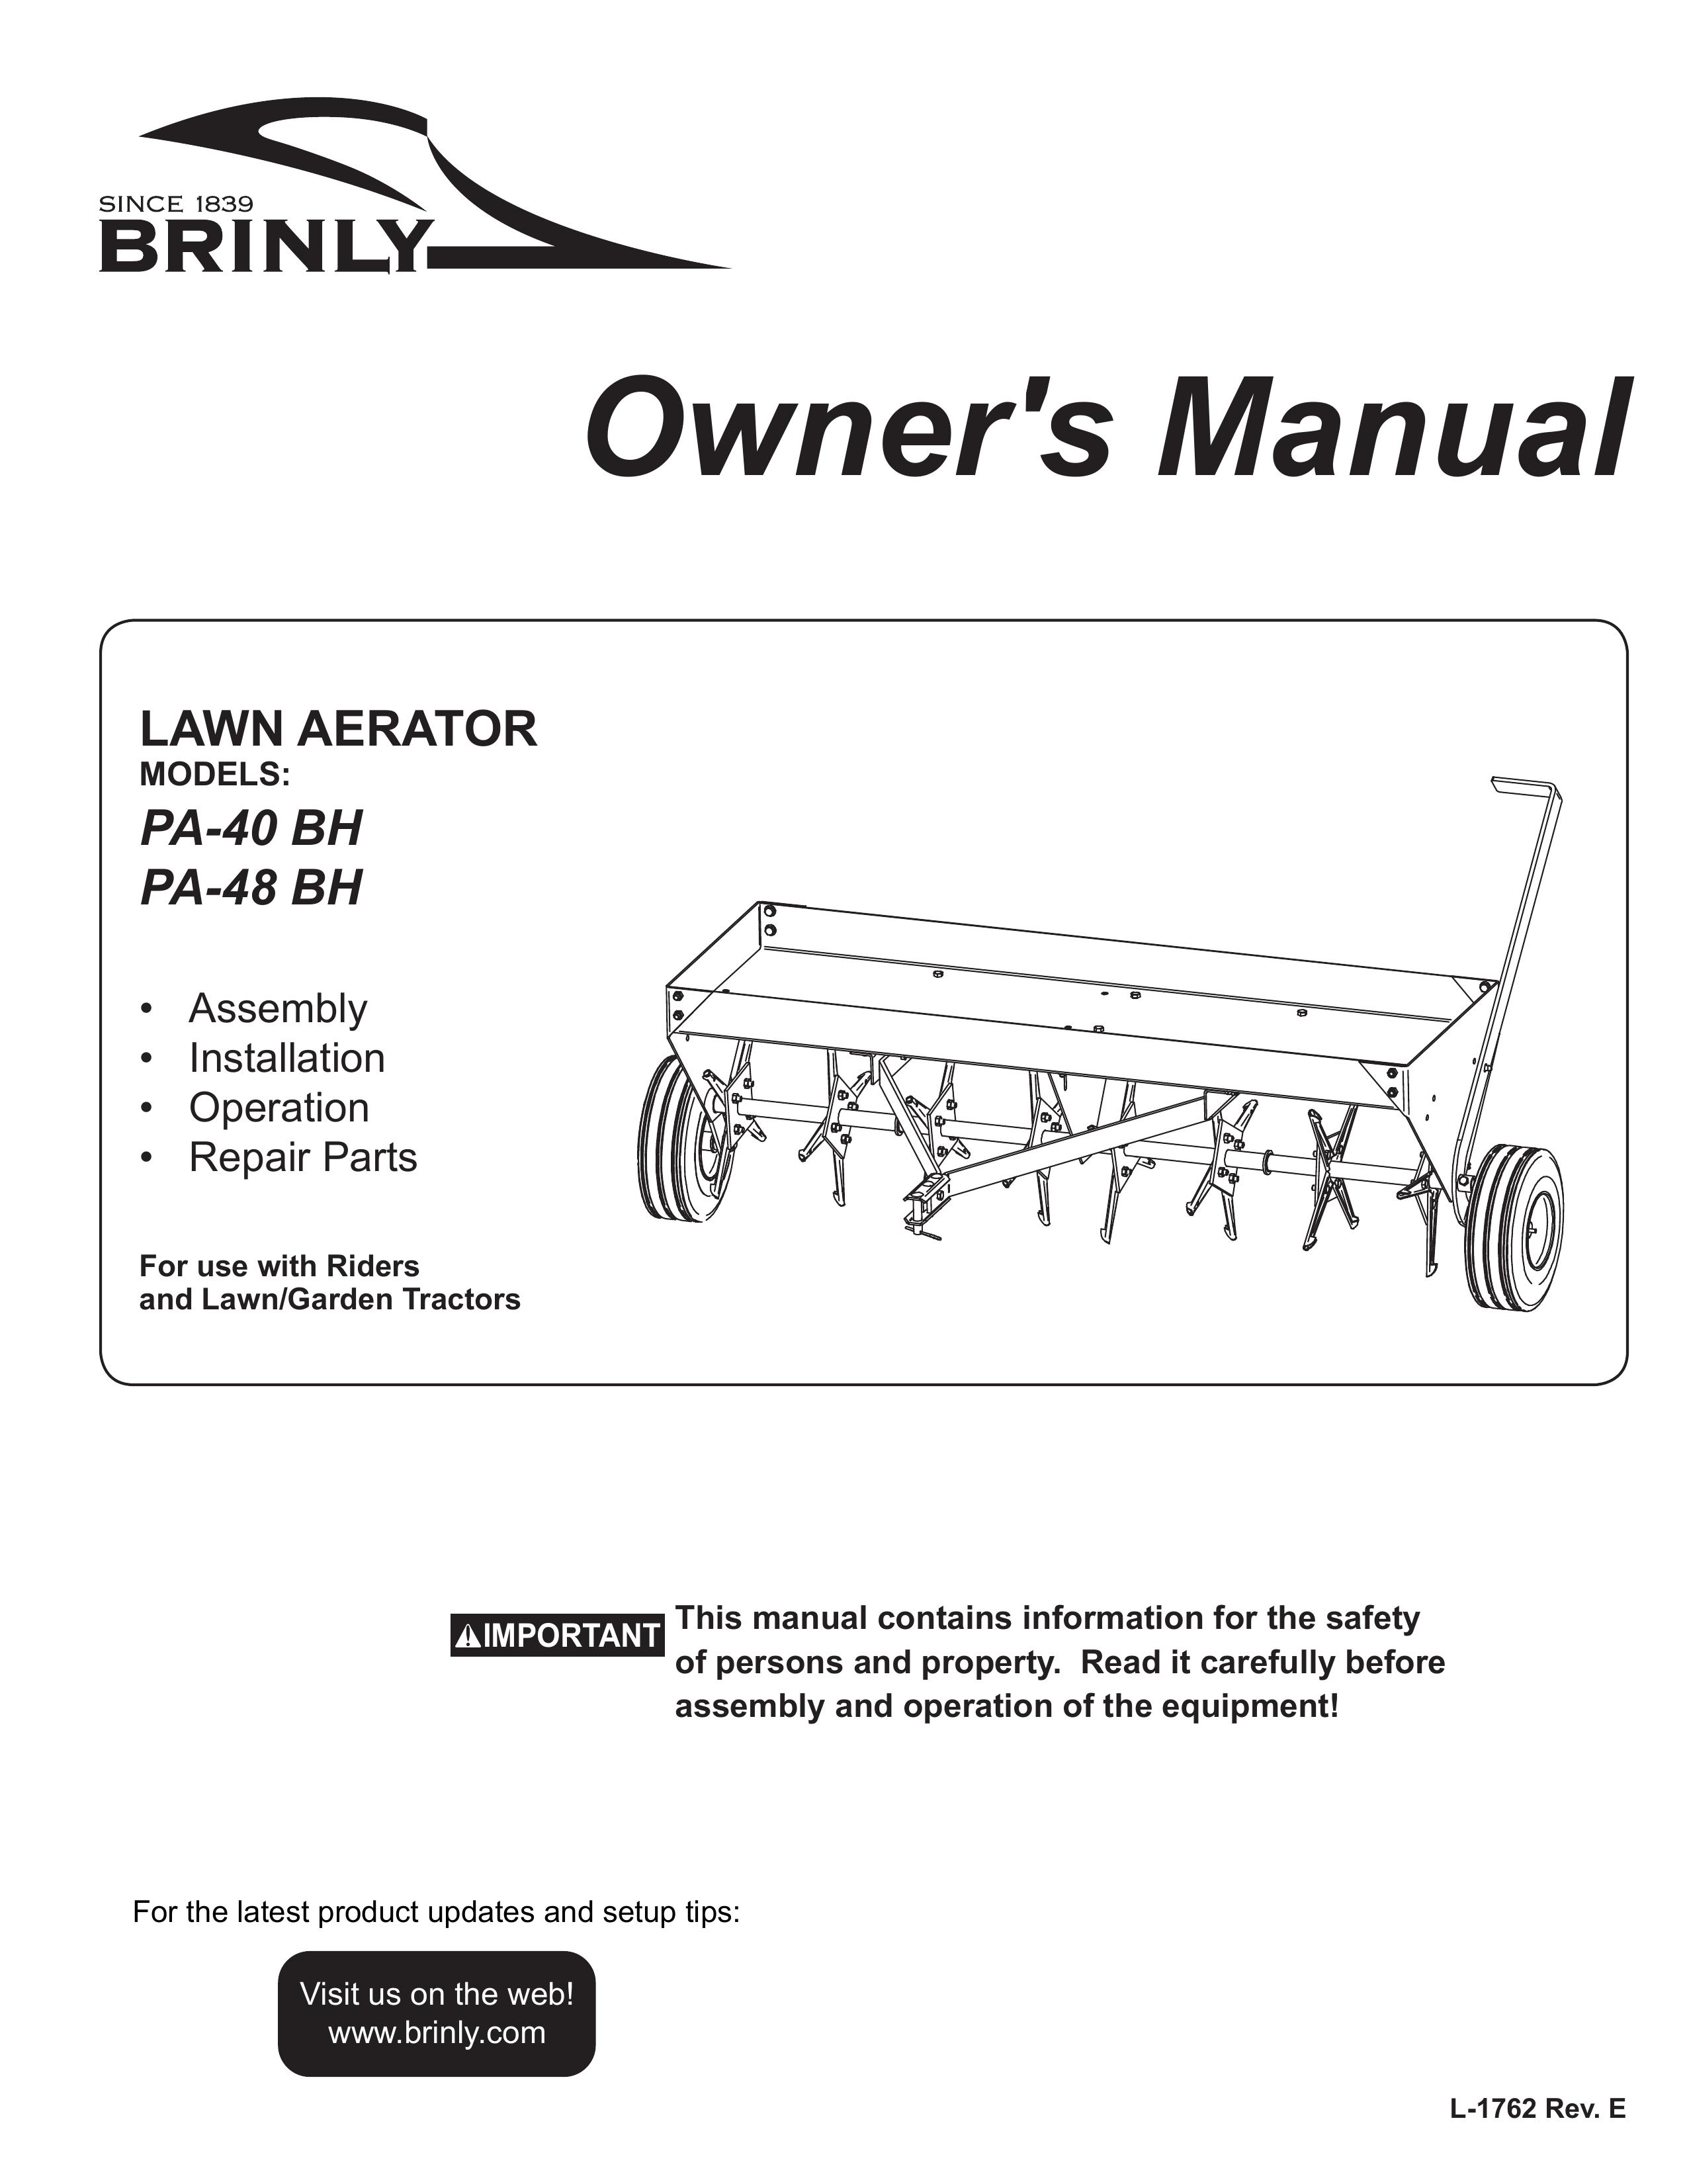 Brinly-Hardy PA-48 BH Lawn Aerator User Manual